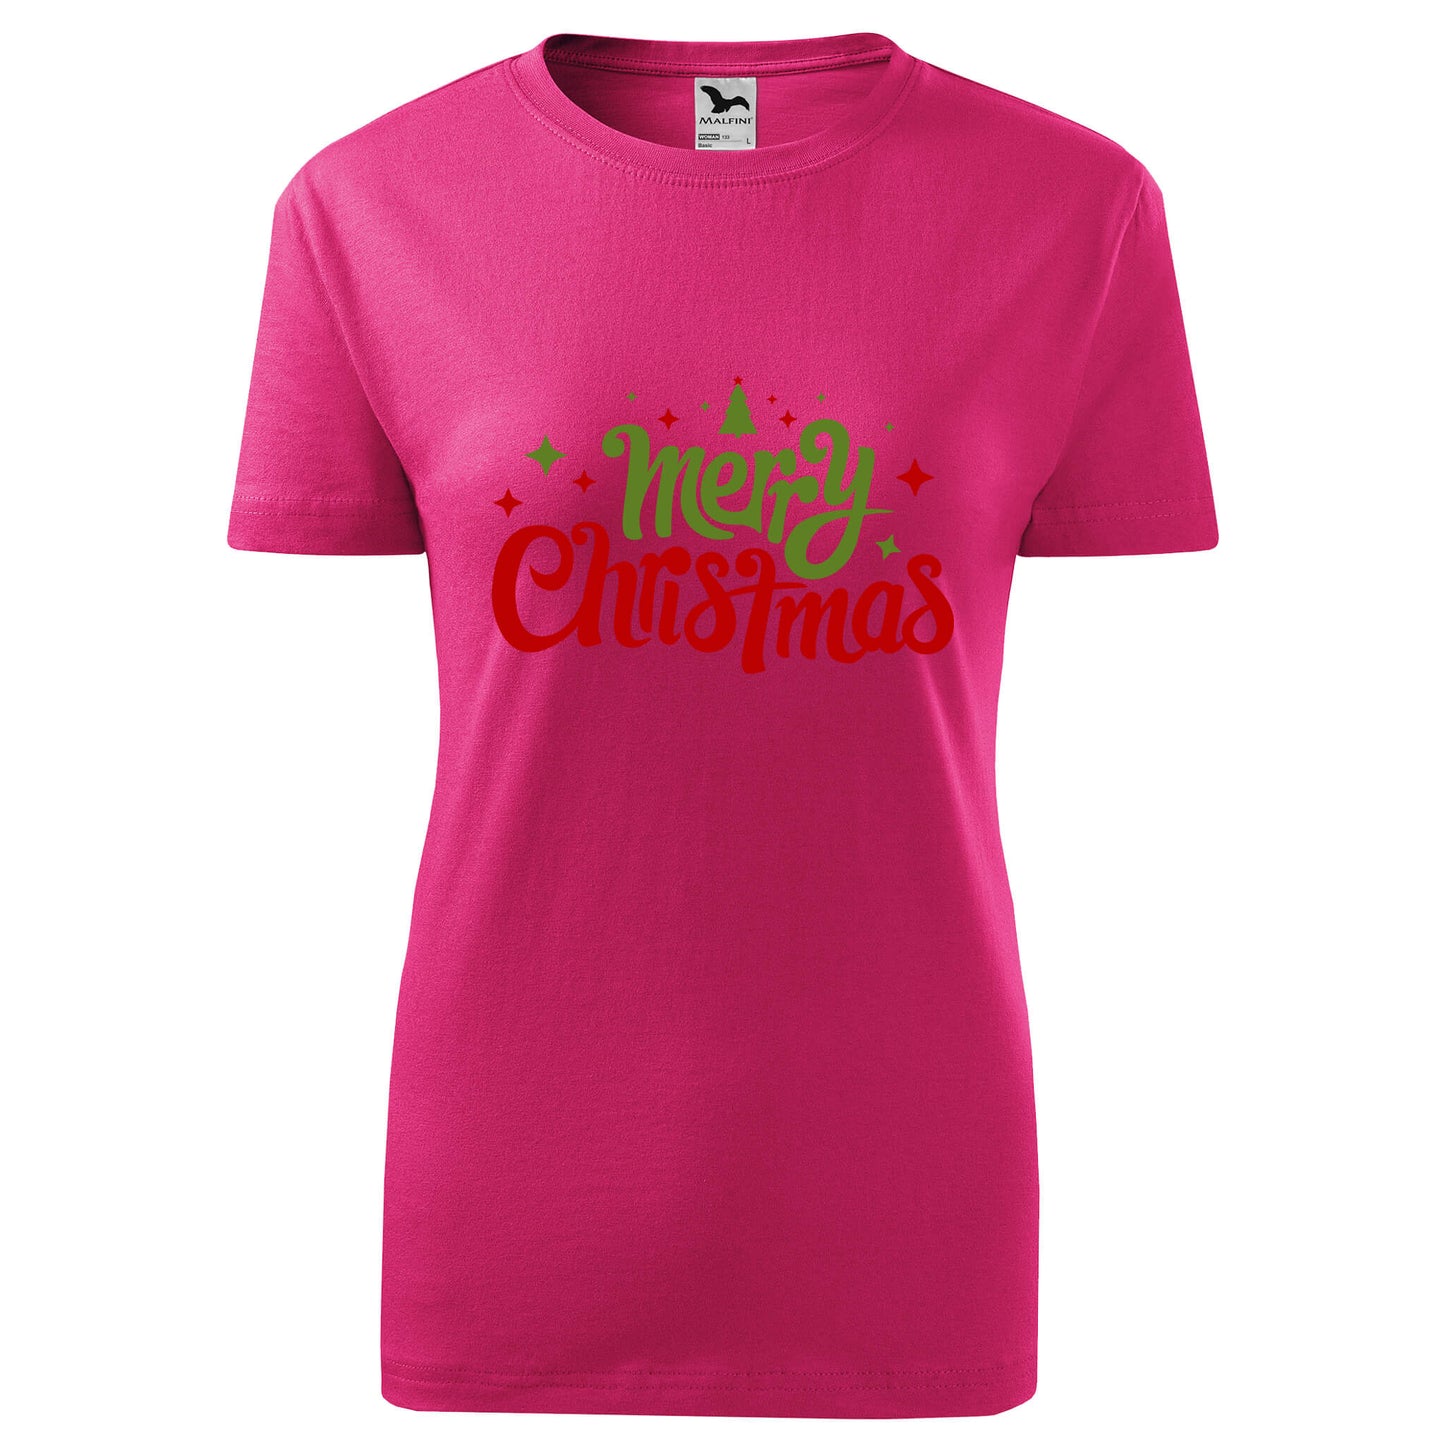 Merry christmas t-shirt - rvdesignprint